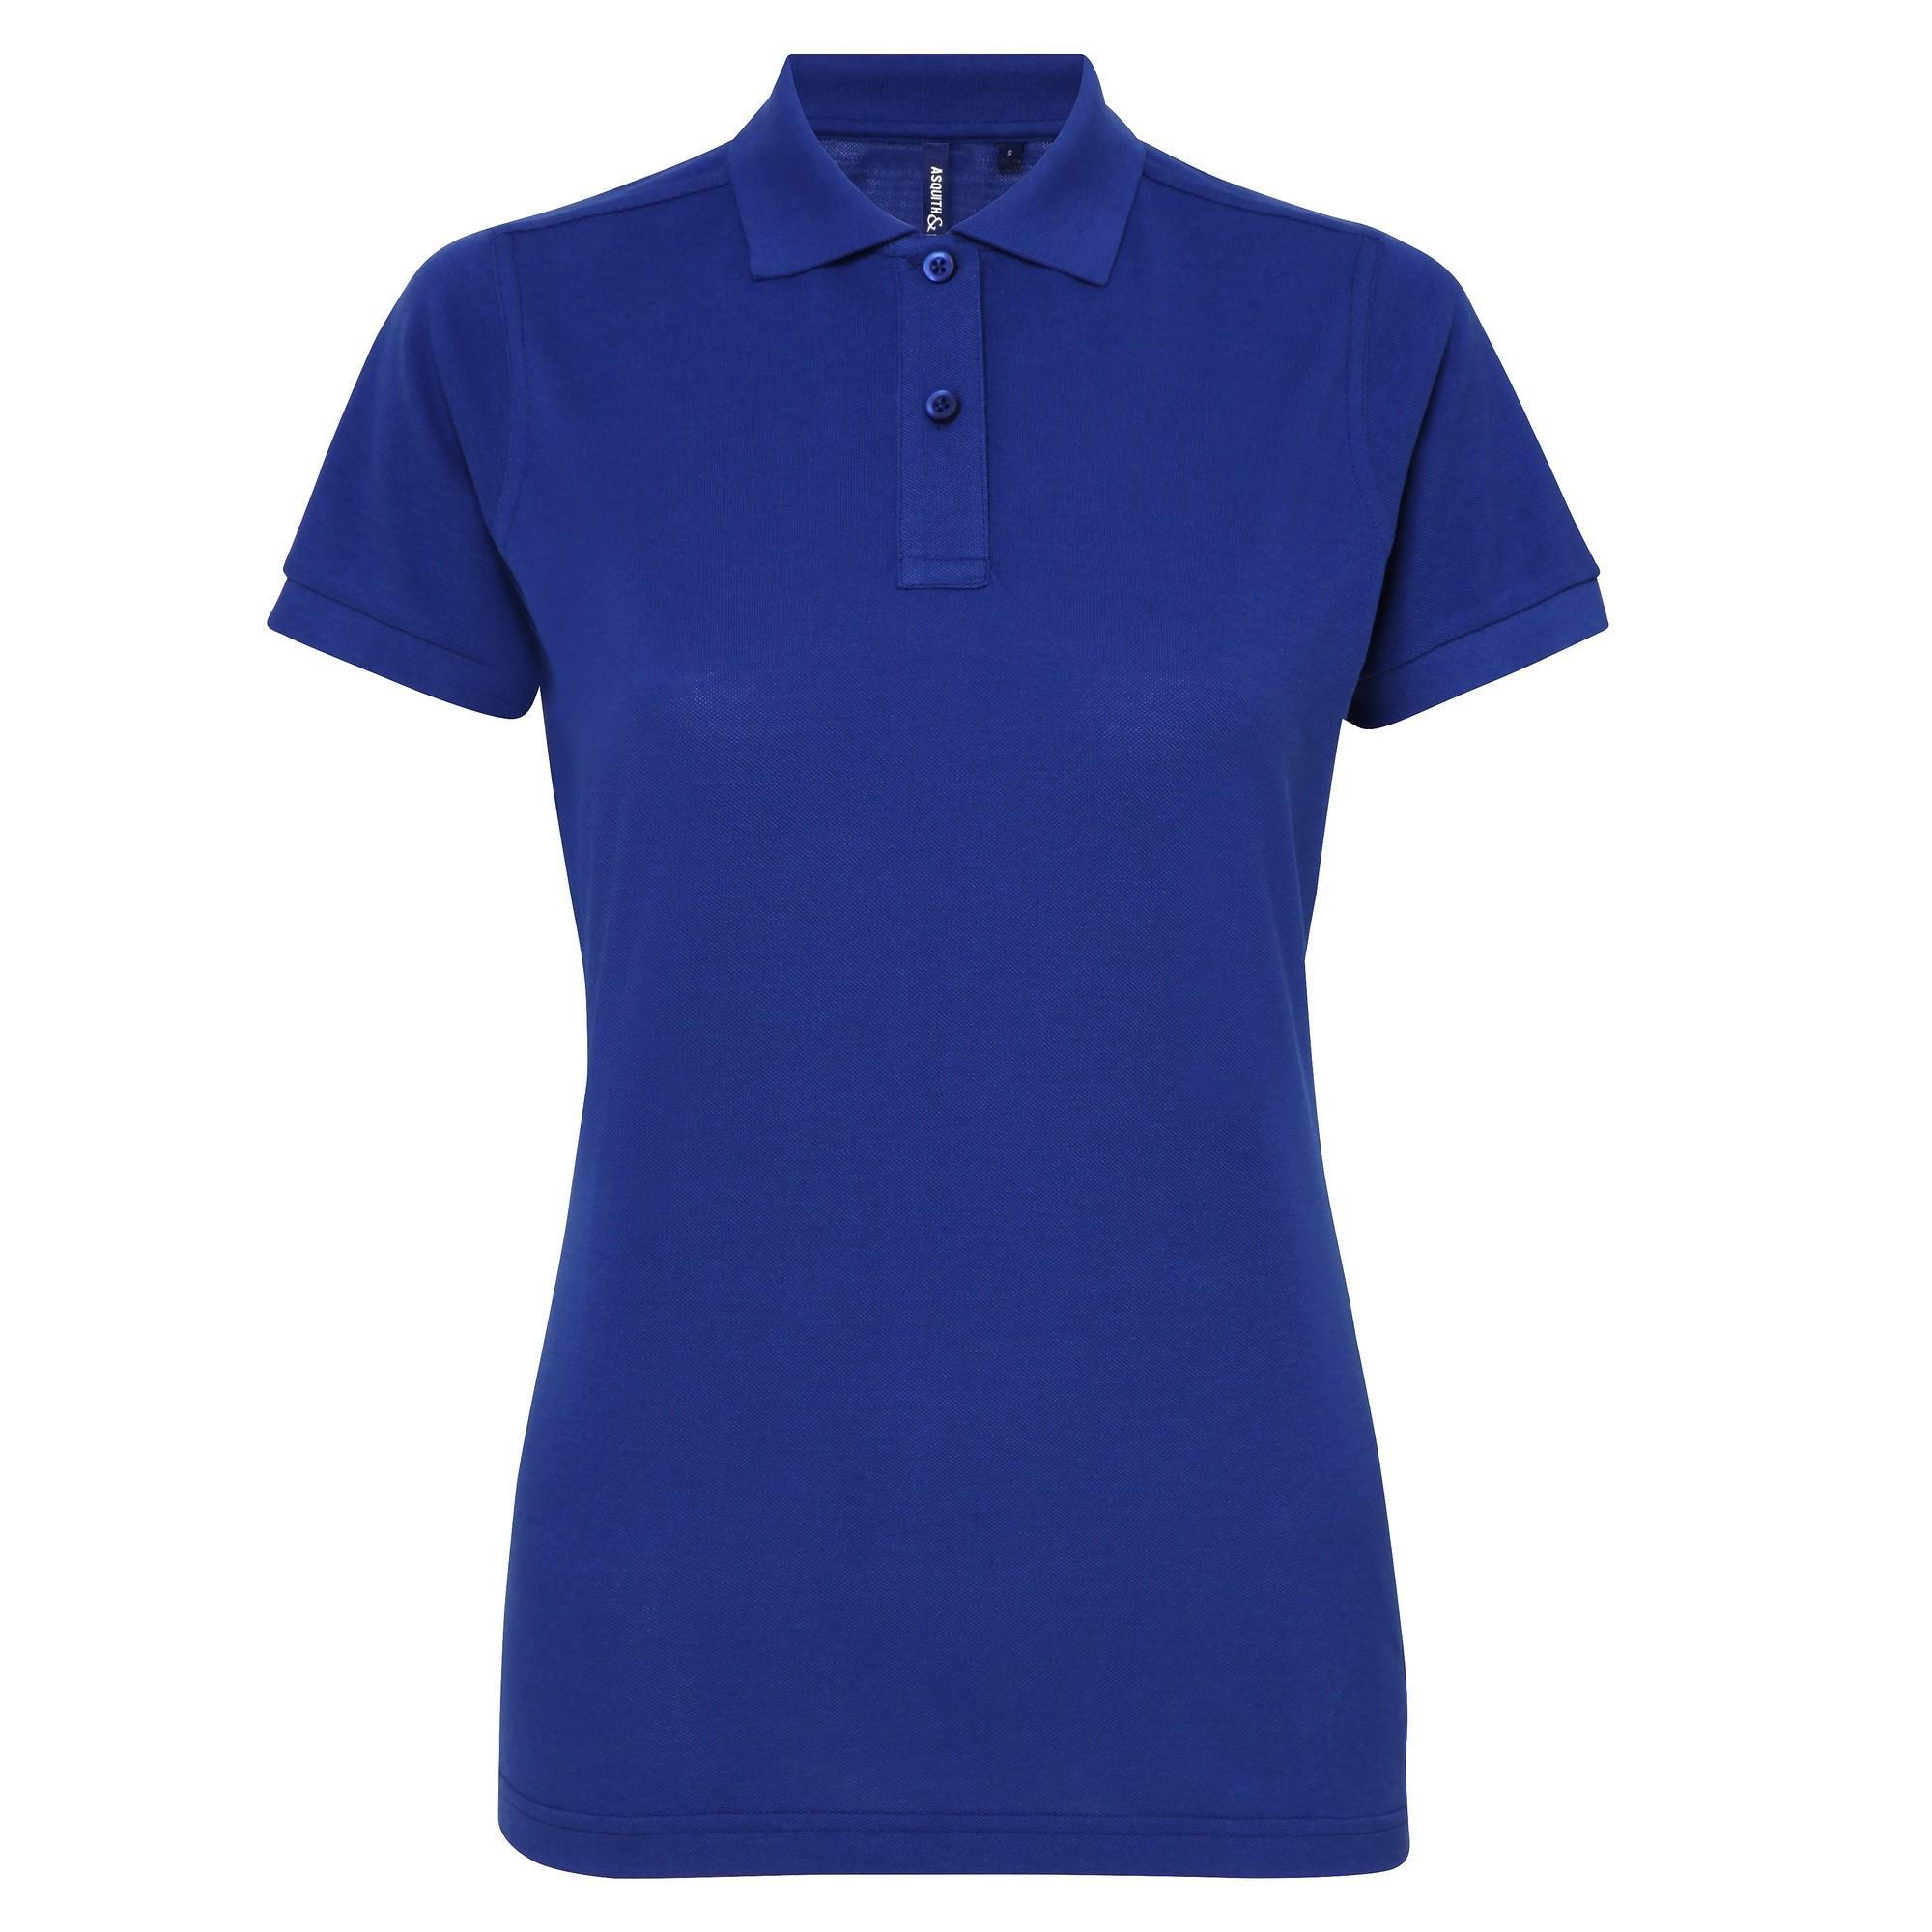 Asquith & Fox Womens/Ladies Short Sleeve Performance Blend Polo Shirt (Royal) (S)